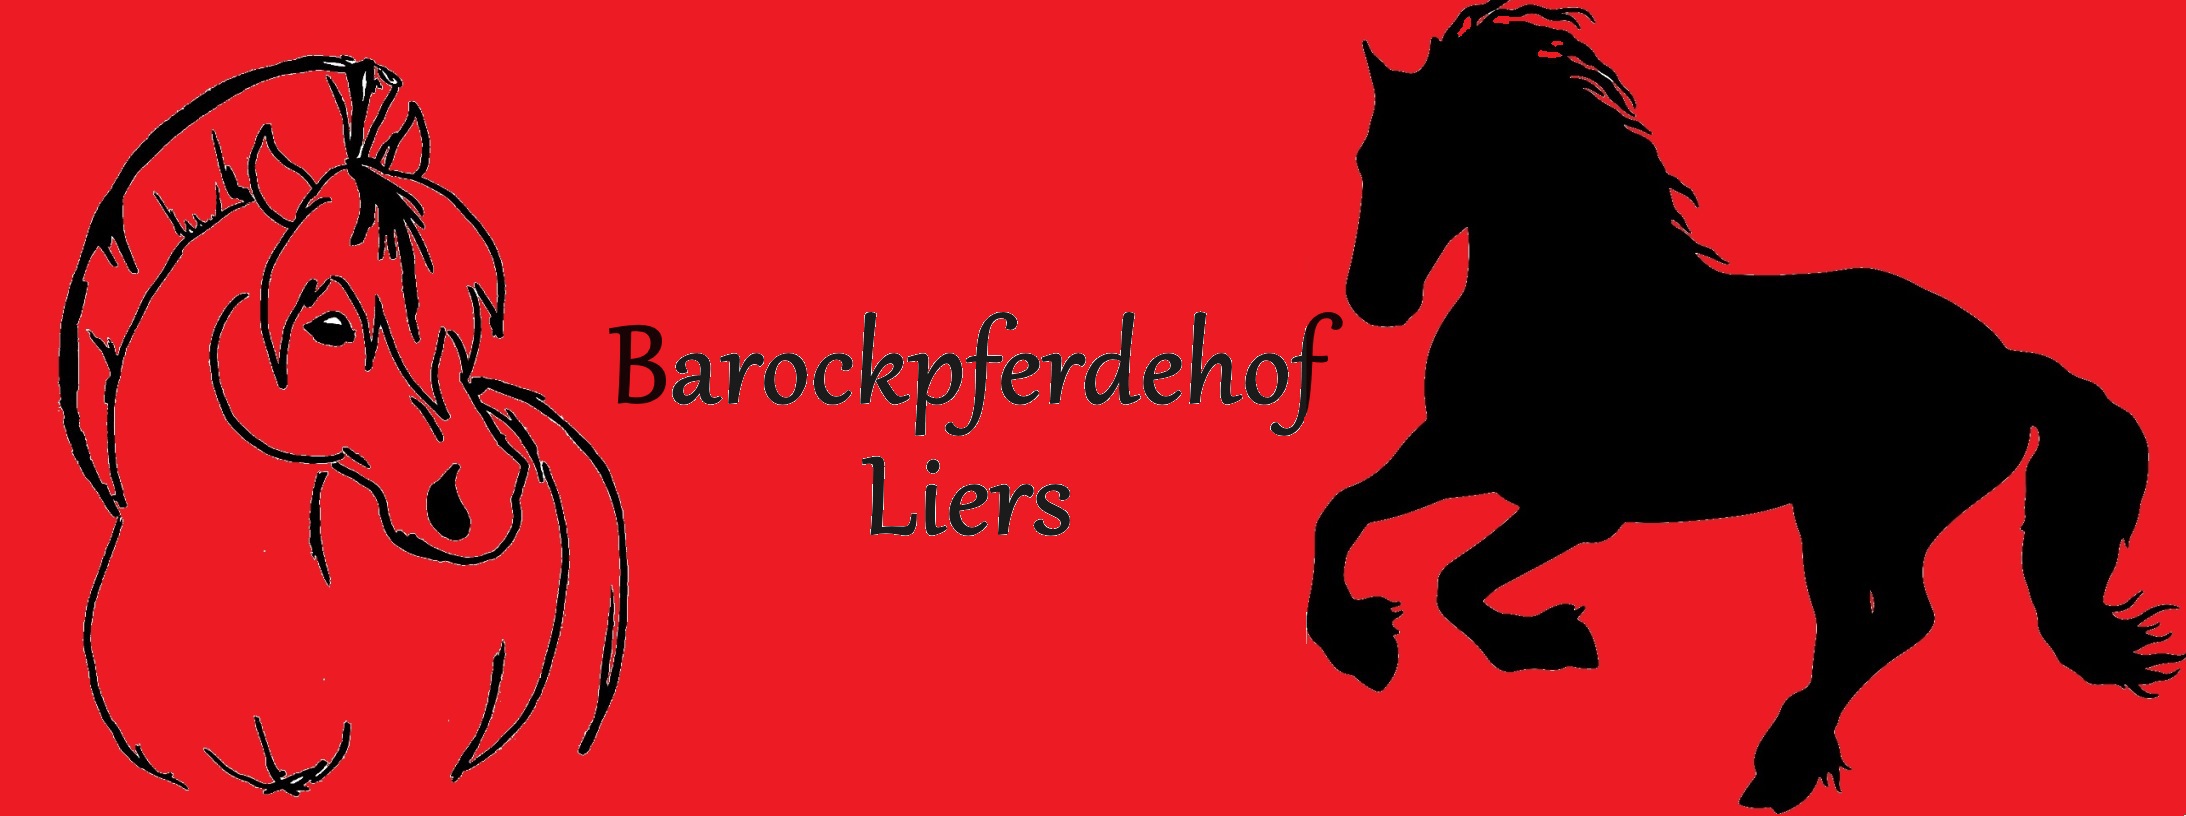 (c) Barockpferdehof-liers.com